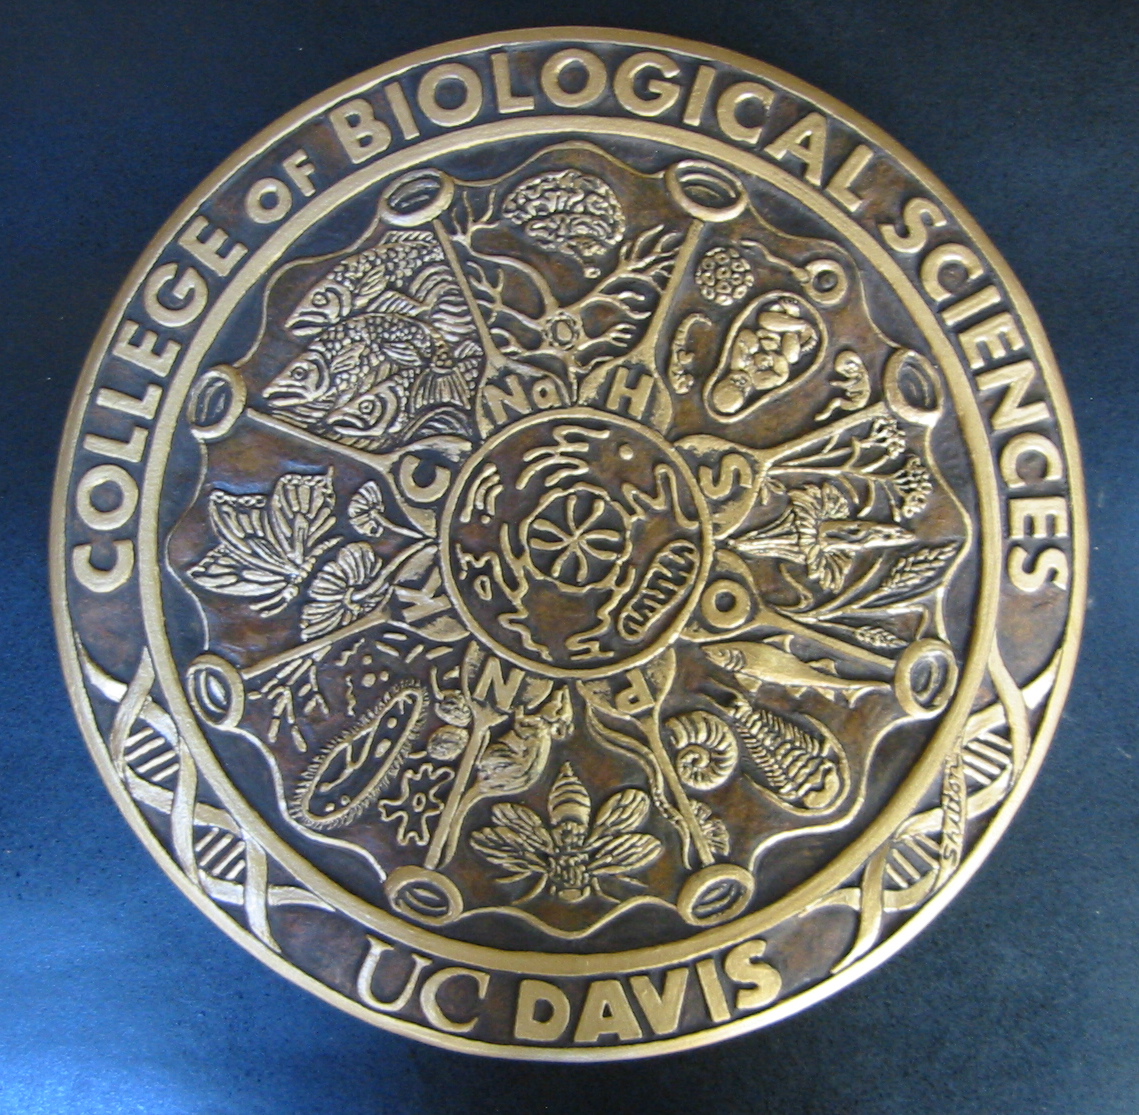 College of Biological Sciences Medal/Seal